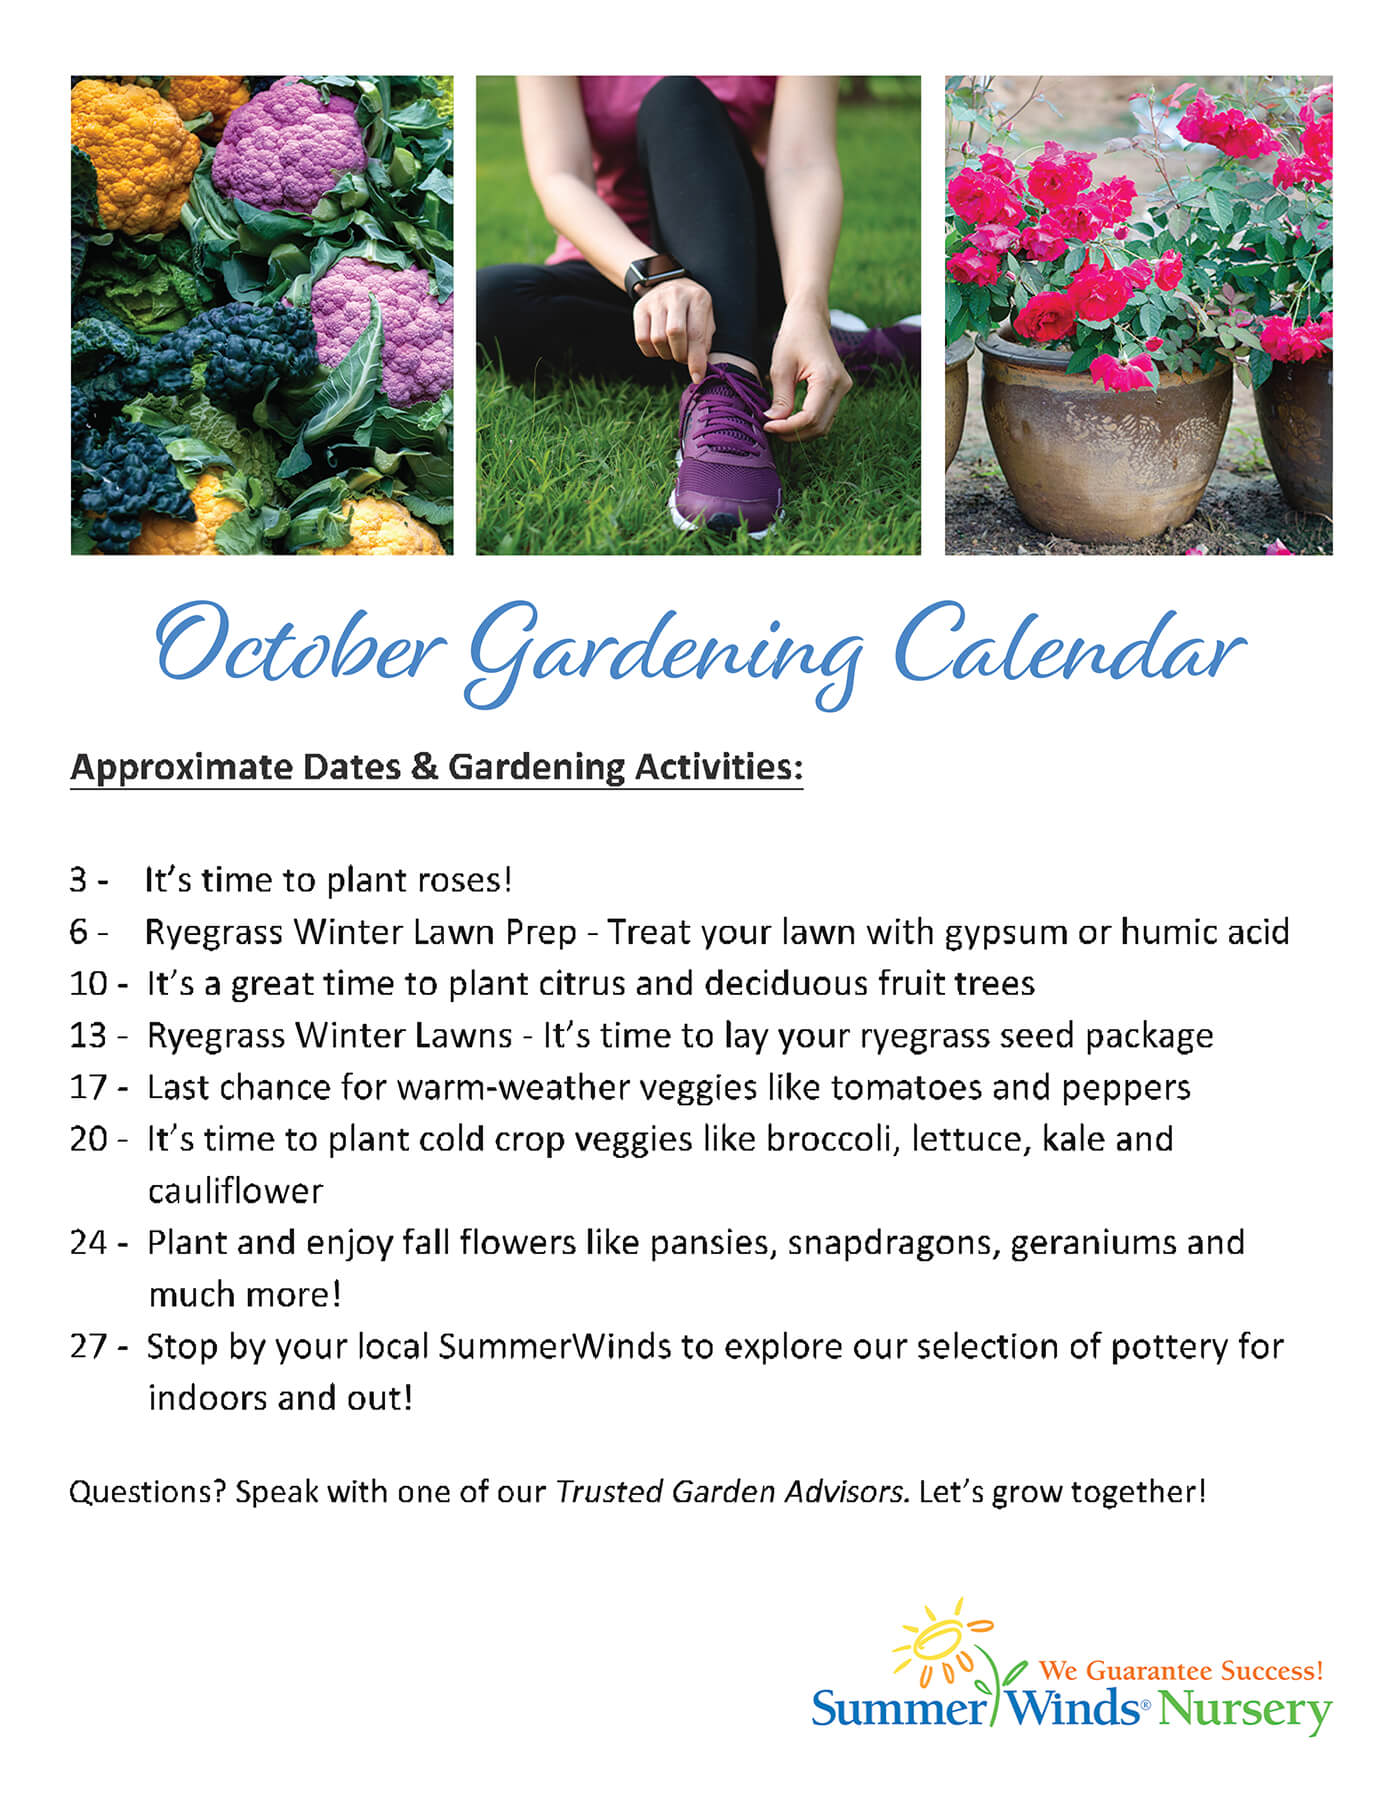 A jpg image of our October Gardening Calendar flyer